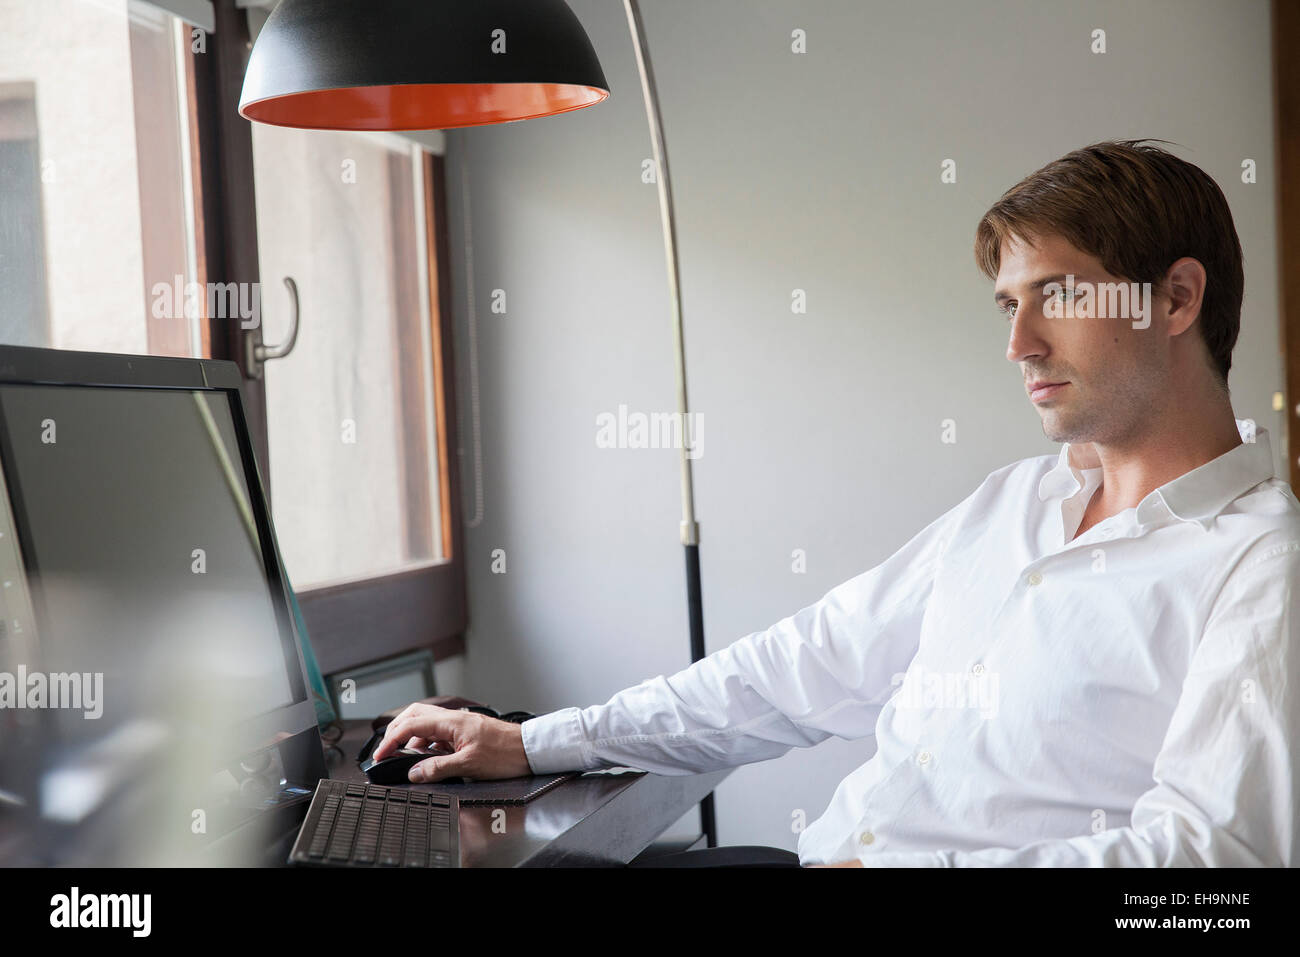 Man using desktop computer Stock Photo